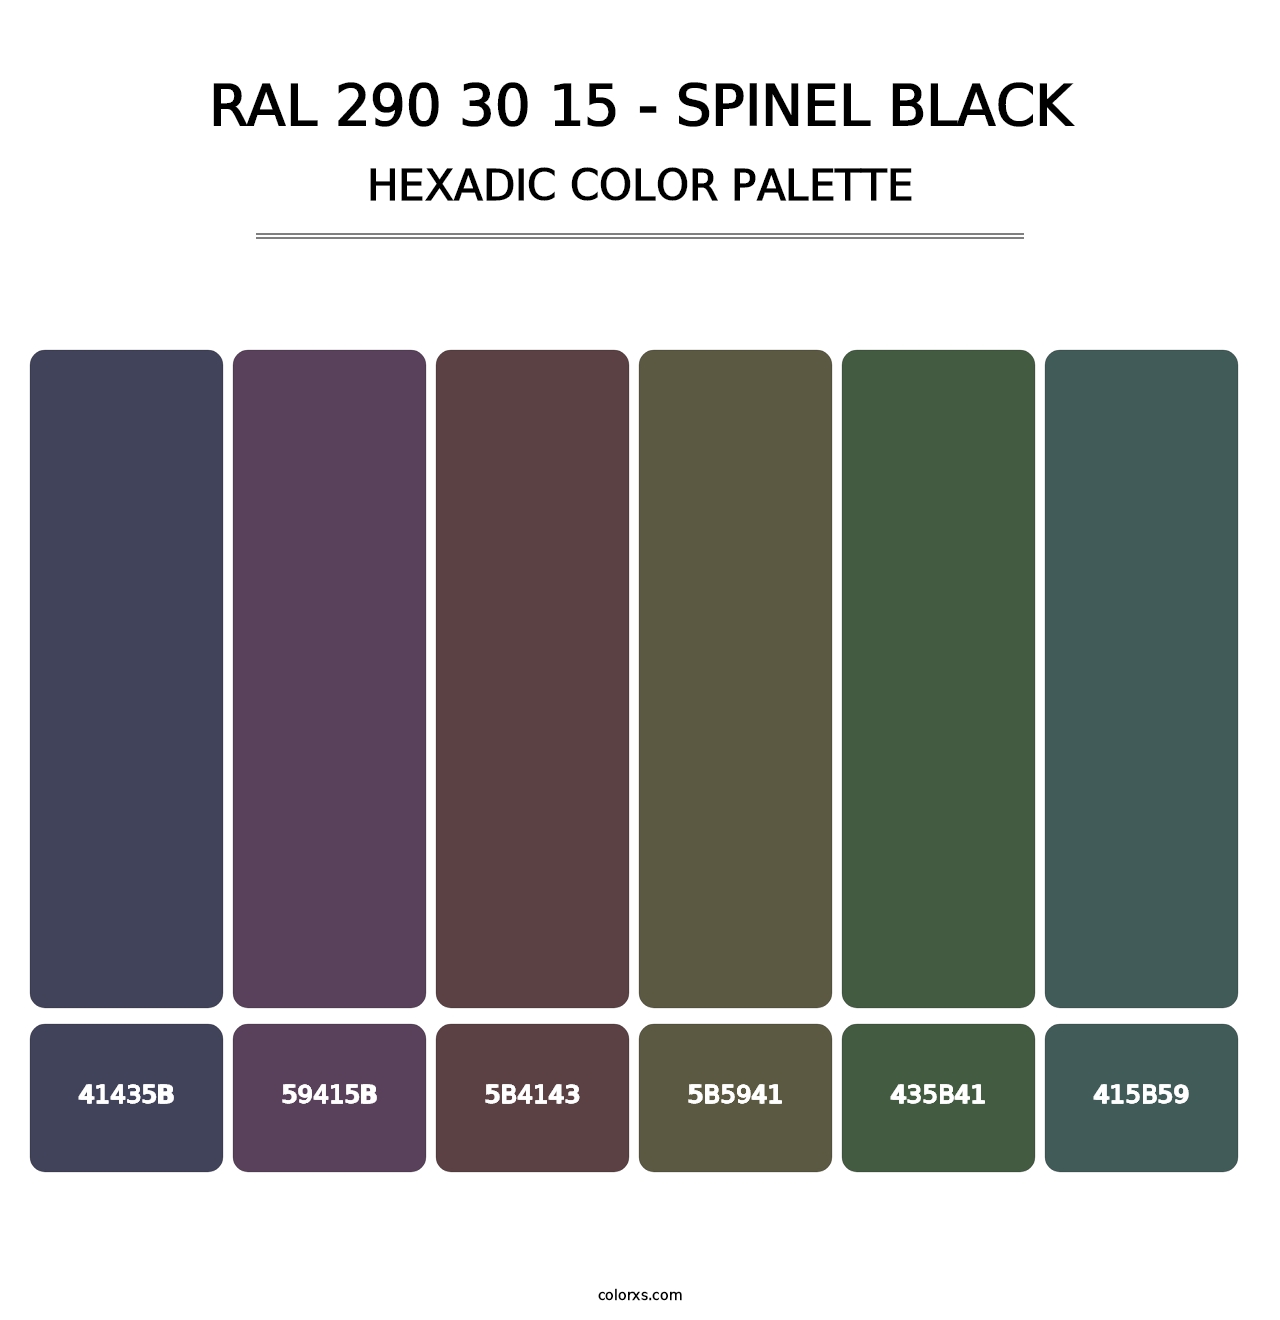 RAL 290 30 15 - Spinel Black - Hexadic Color Palette